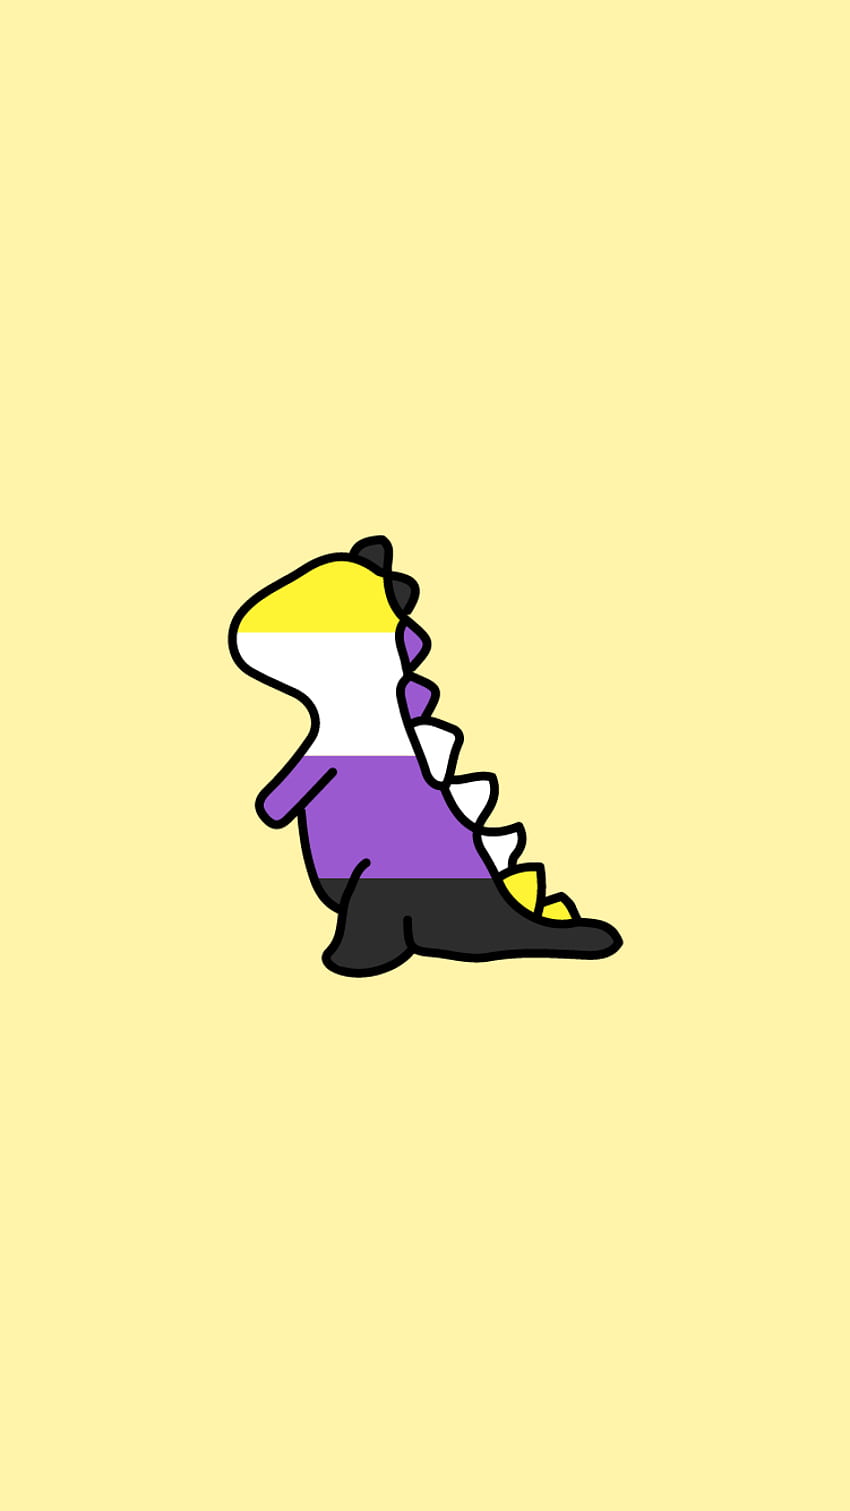 A purple dinosaur with yellow stripes - Non binary